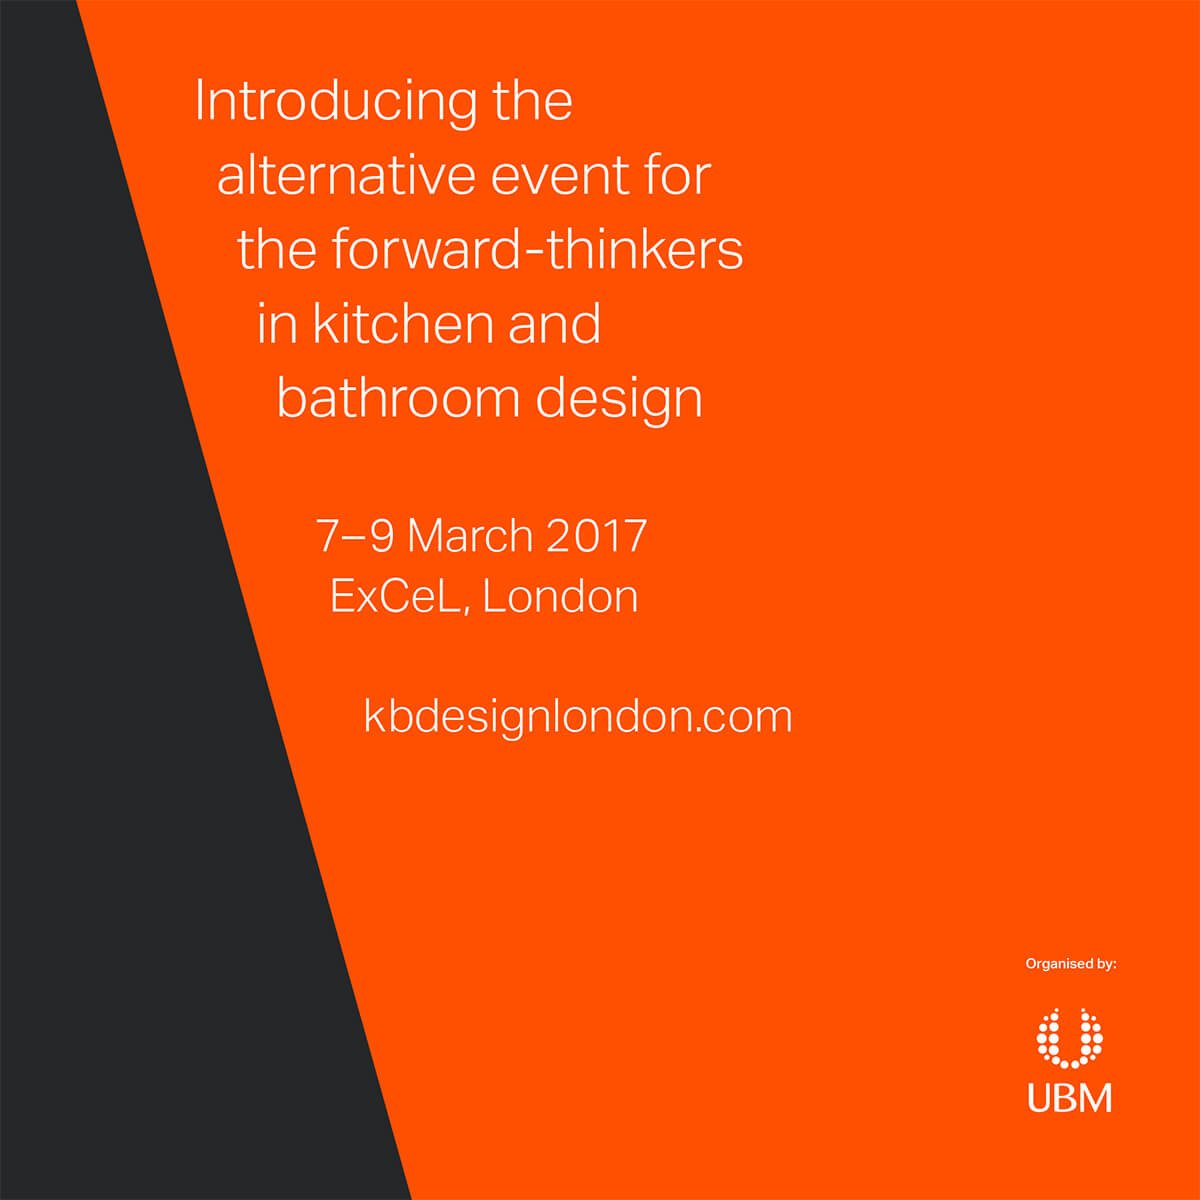 kb_design_london-2